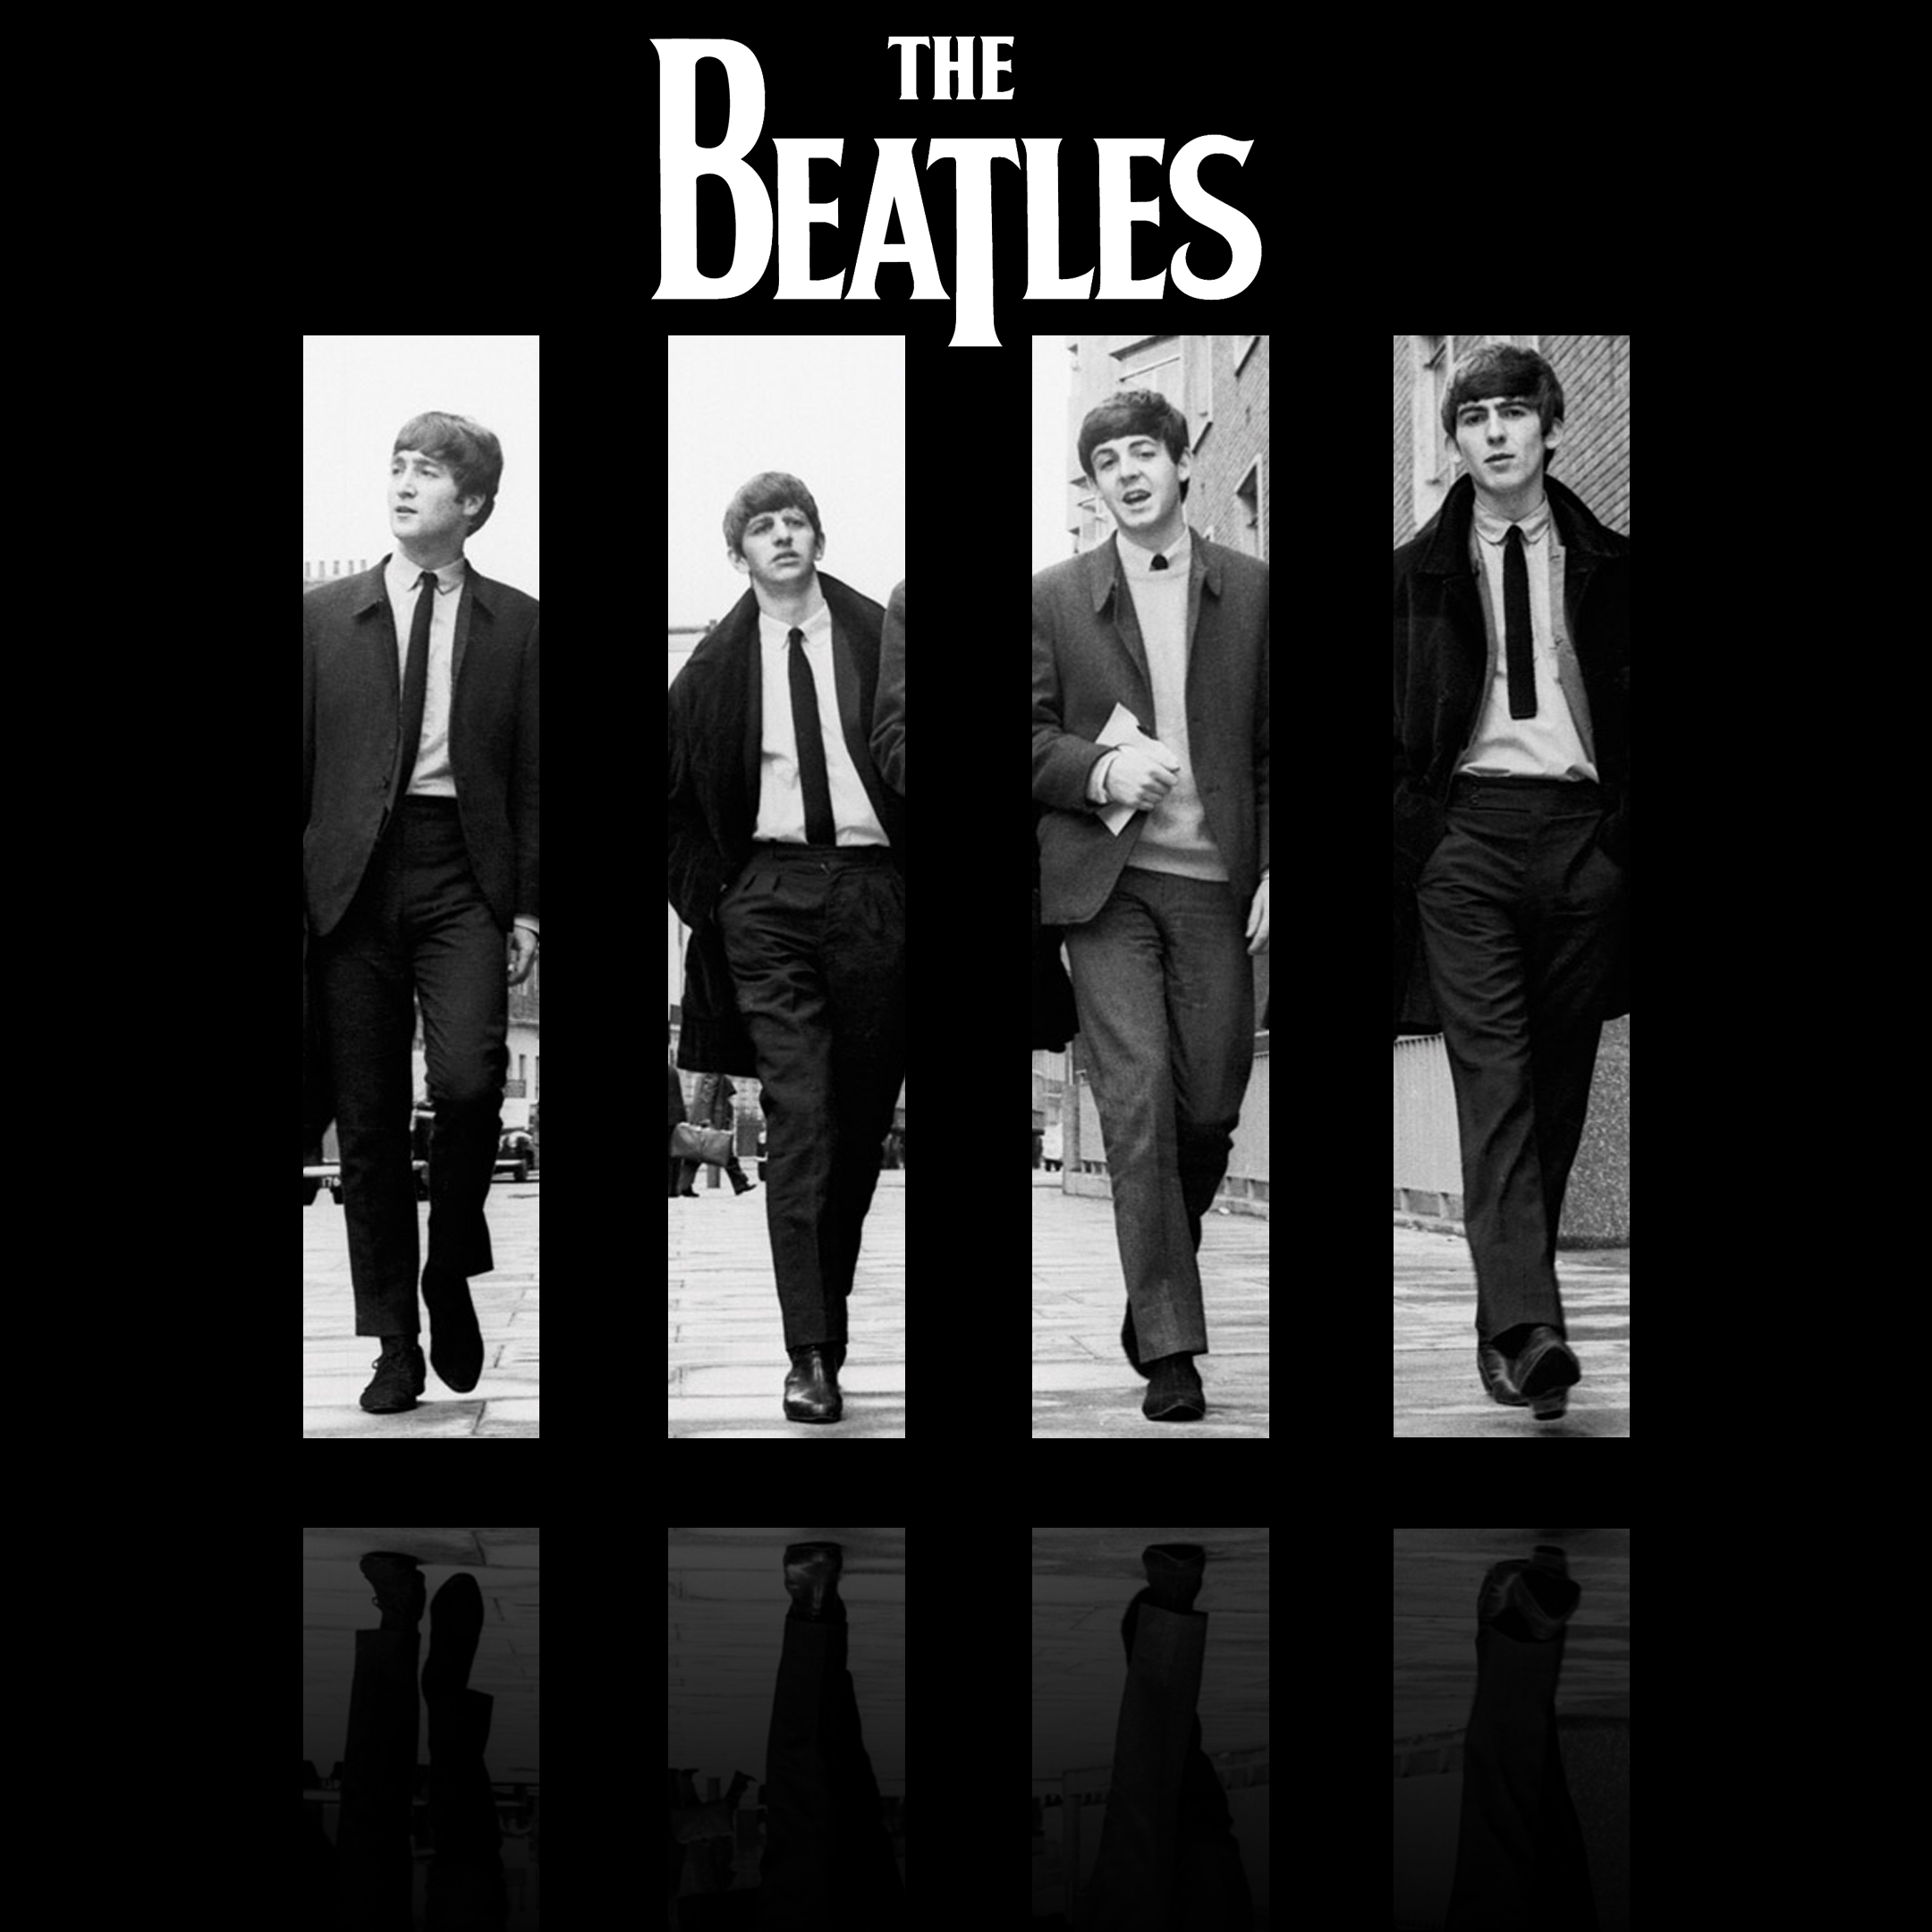 Beatles Wallpaper for iPad